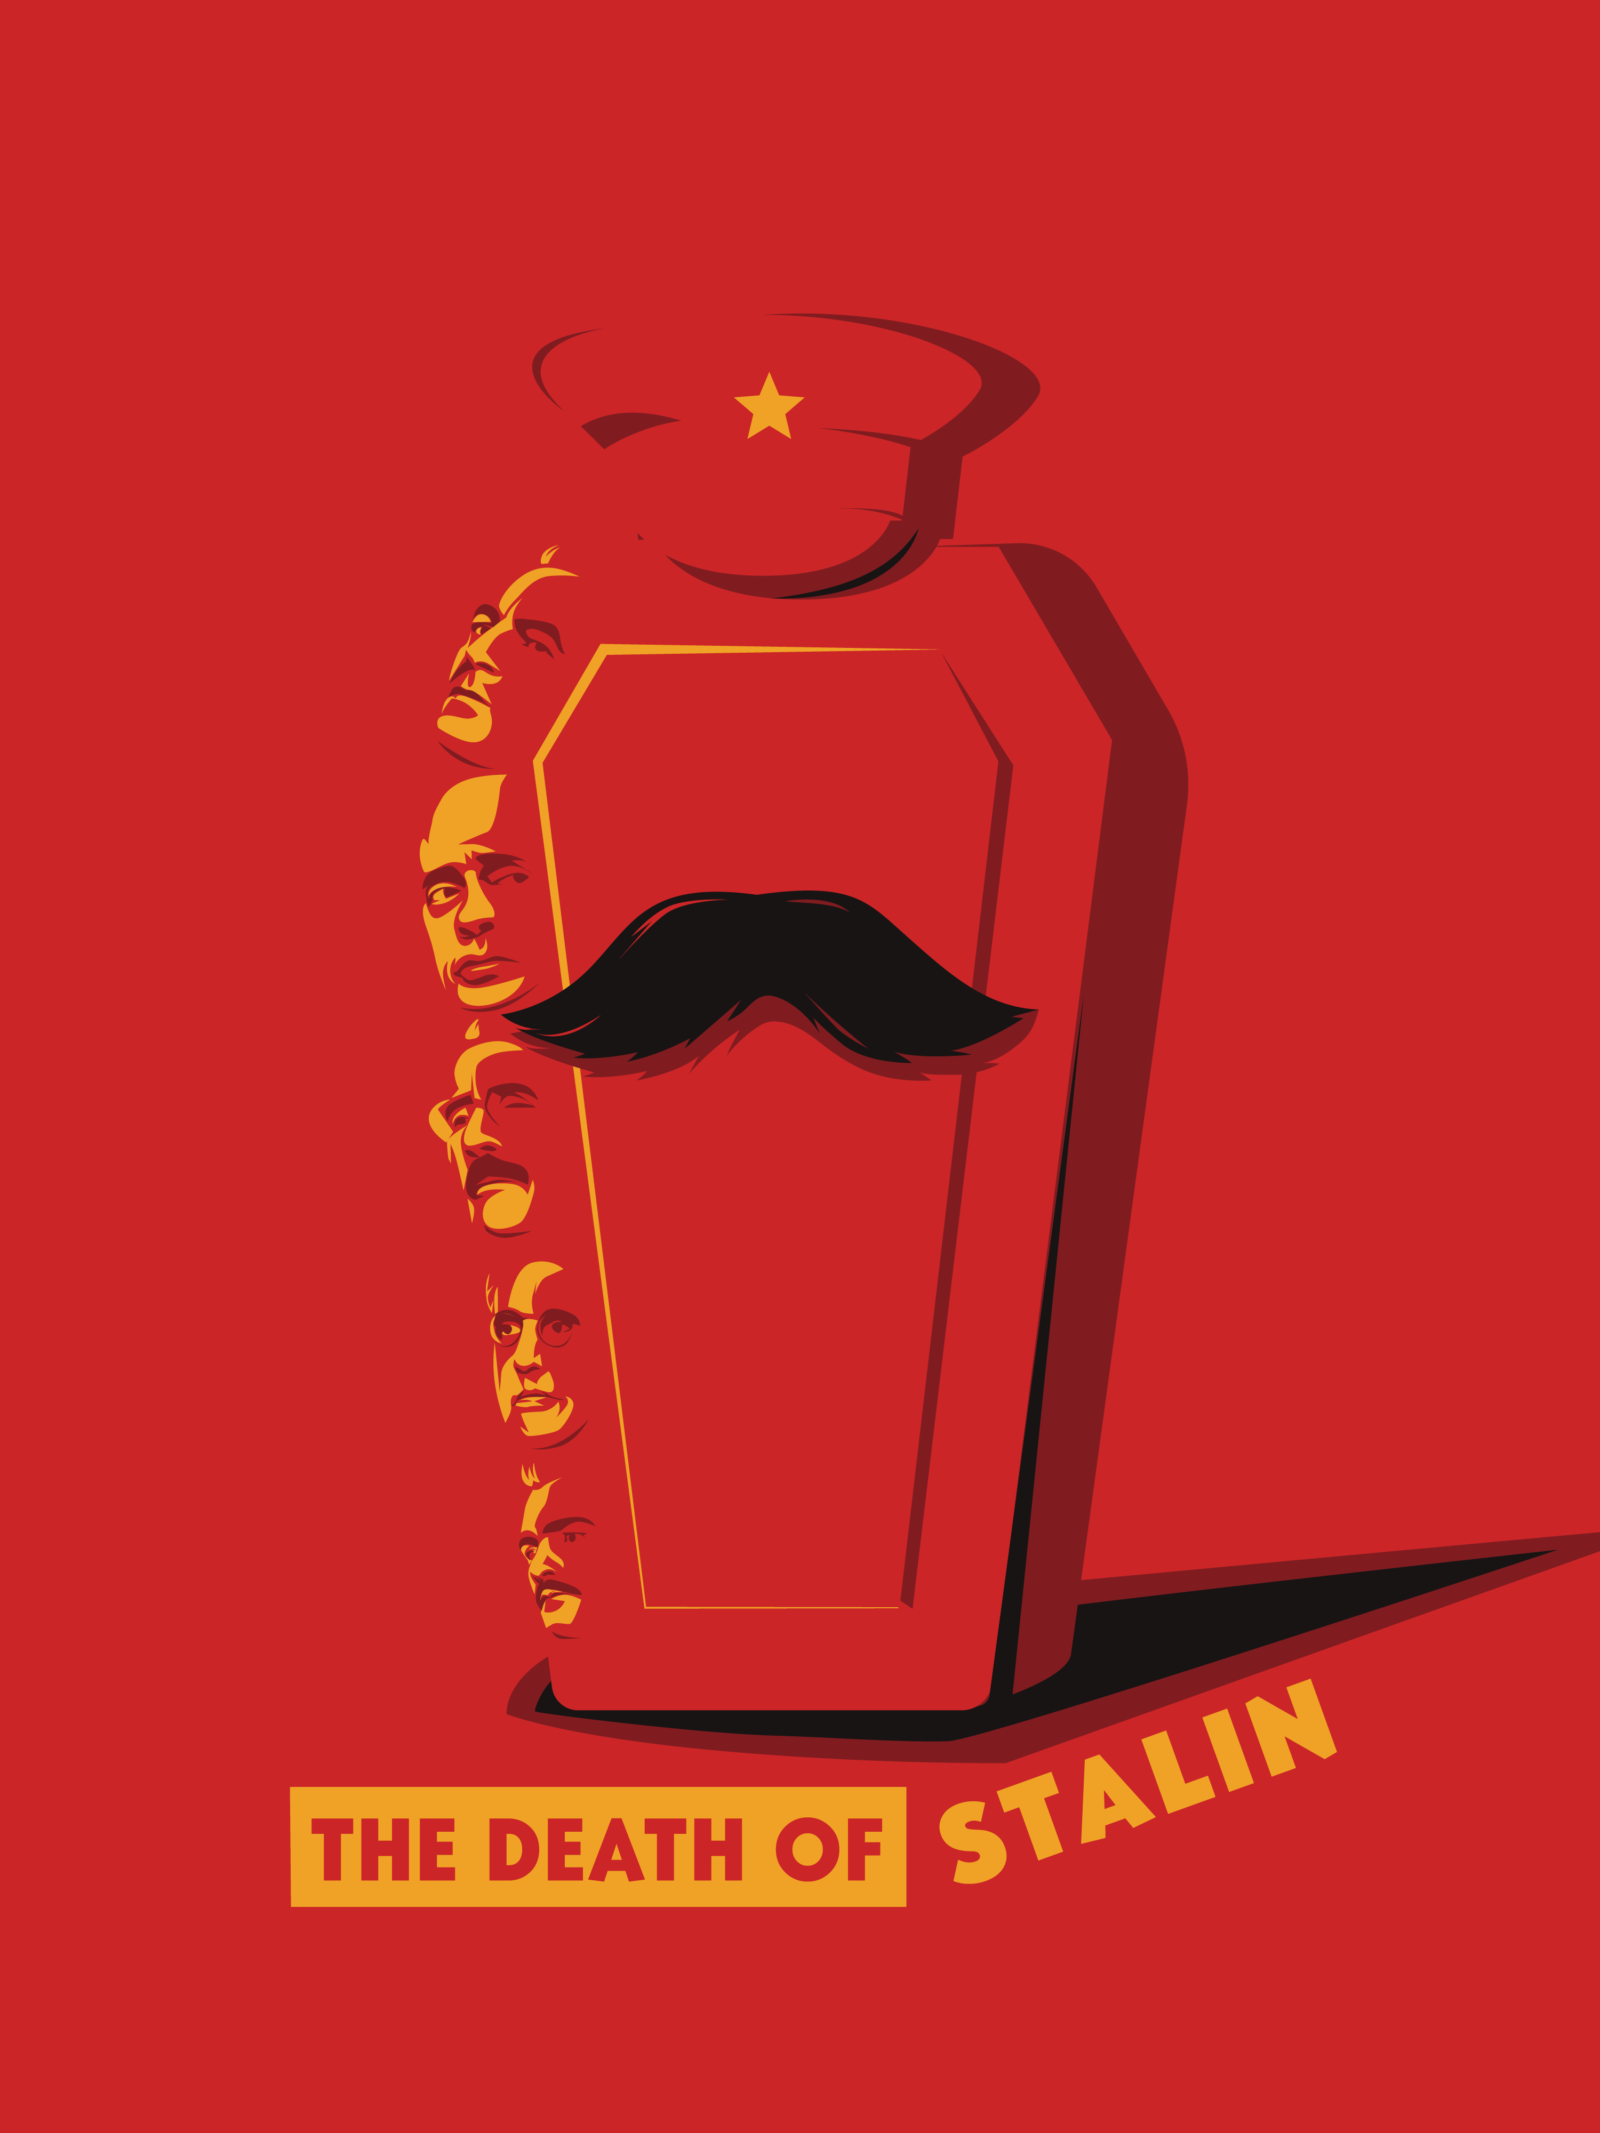 Death of stalin. The Death Stalin обои. The Death of Stalin poster. The Death of Stalin Arts. Сталин плакат смерть.